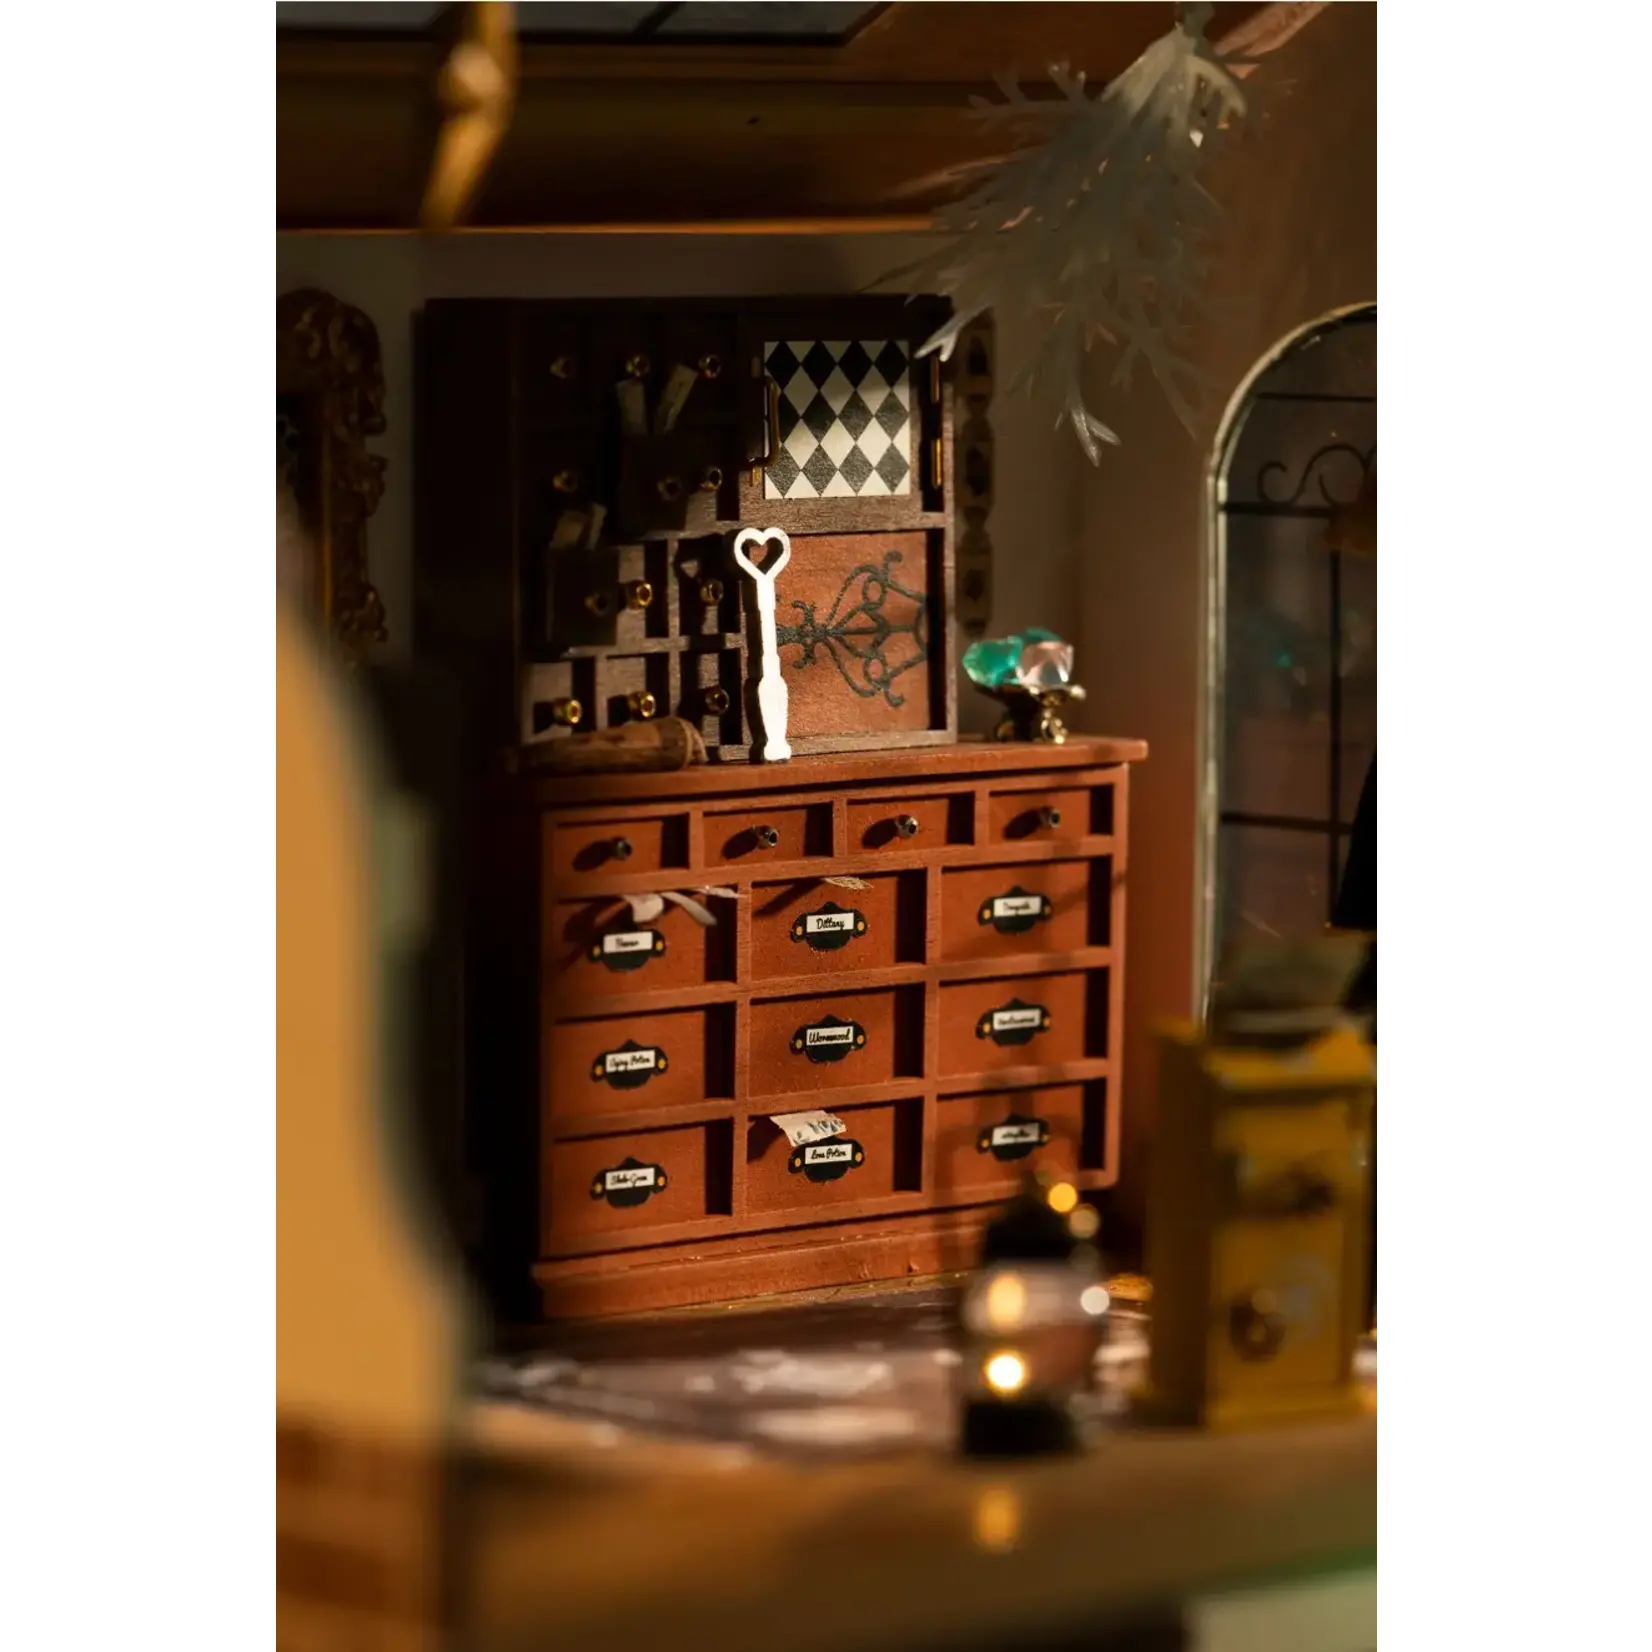 DG155, DIY Miniature House Kit: Kiki's Magic Emporium